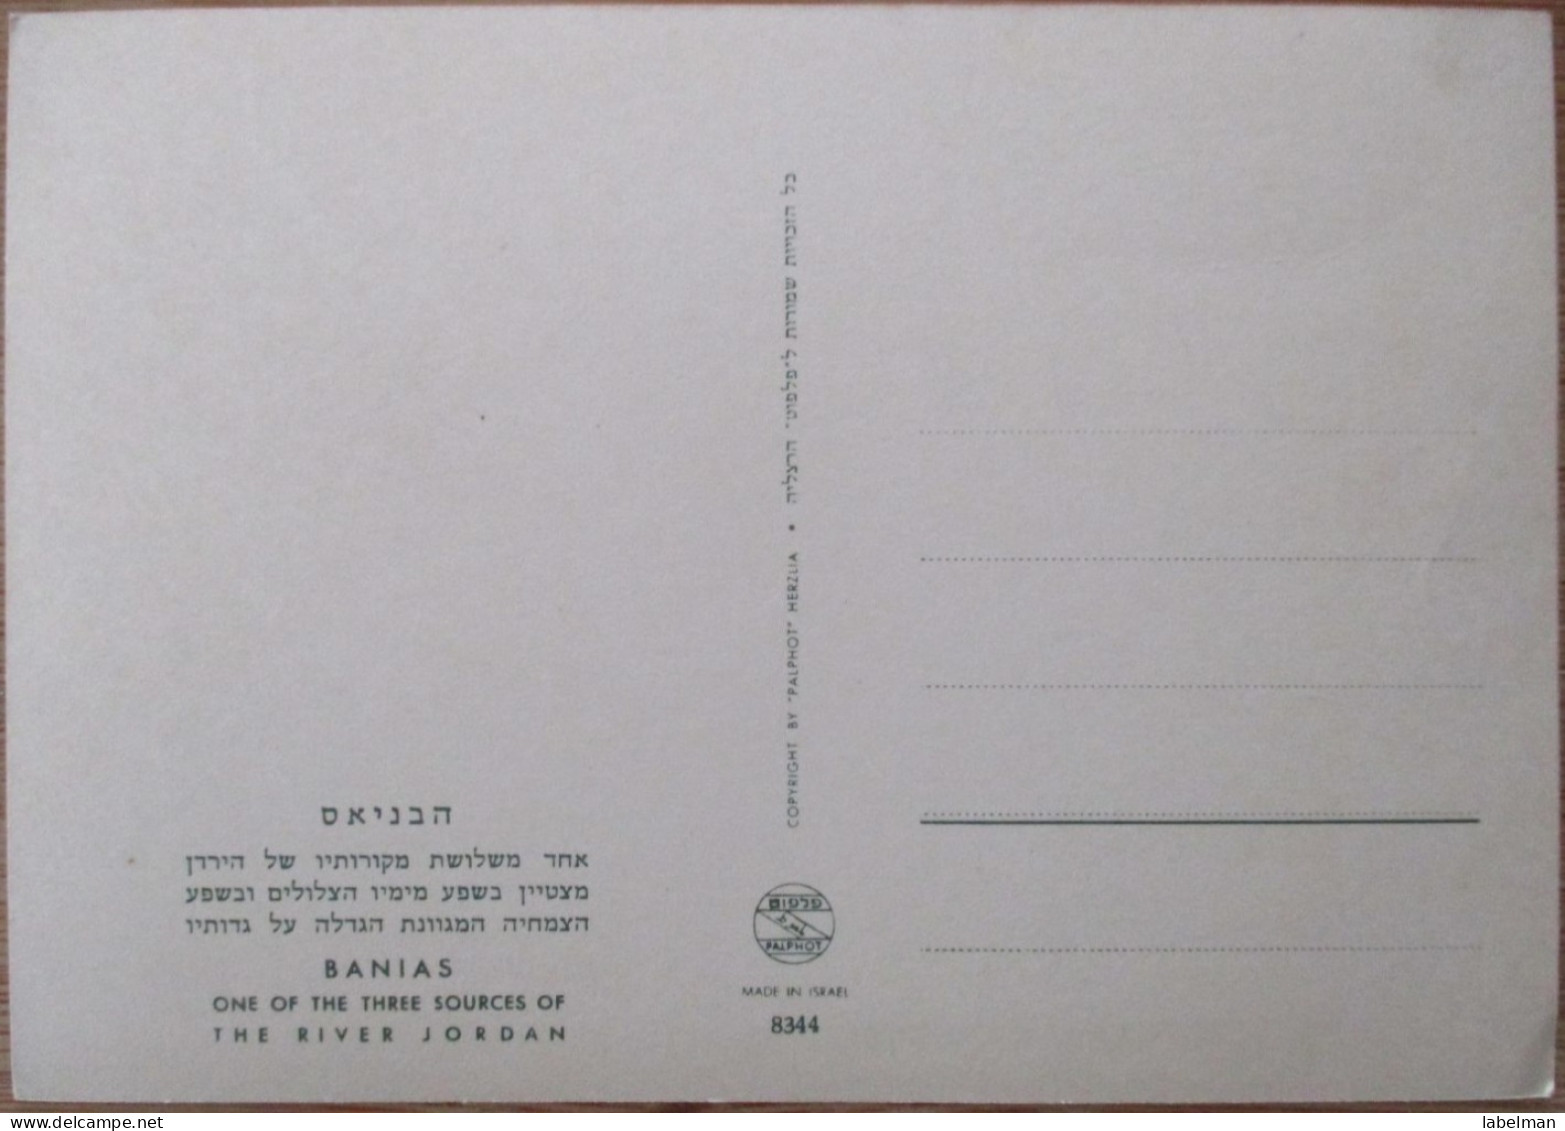 ISRAEL BANIAS JORDAN RIVER UPPER GALILEE POSTCARD ANSICHTSKARTE CARTE POSTALE CARTOLINA POSTKARTE CARD KARTE - Israel